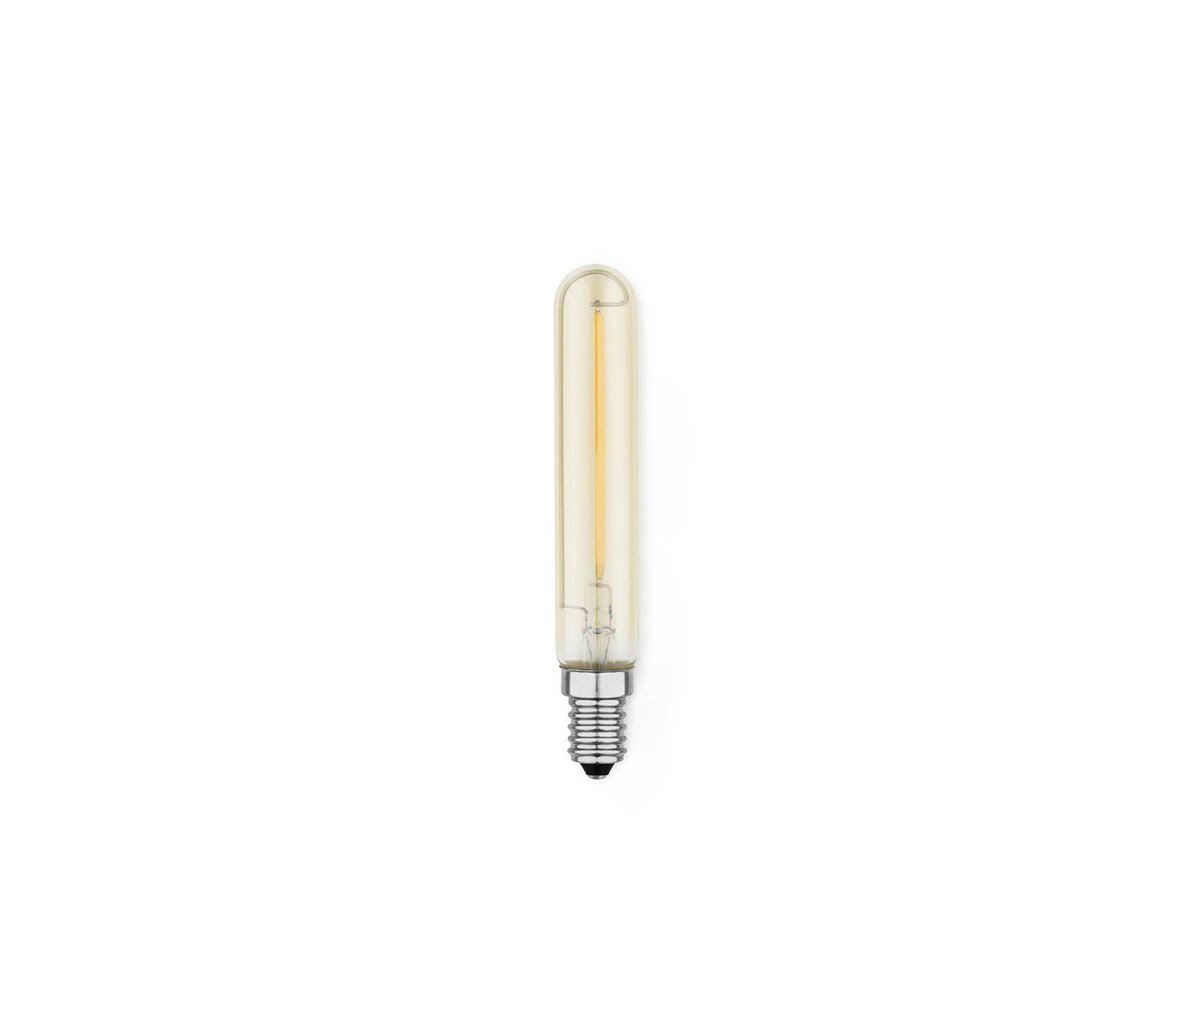 LED Bulb for Amp Lamps